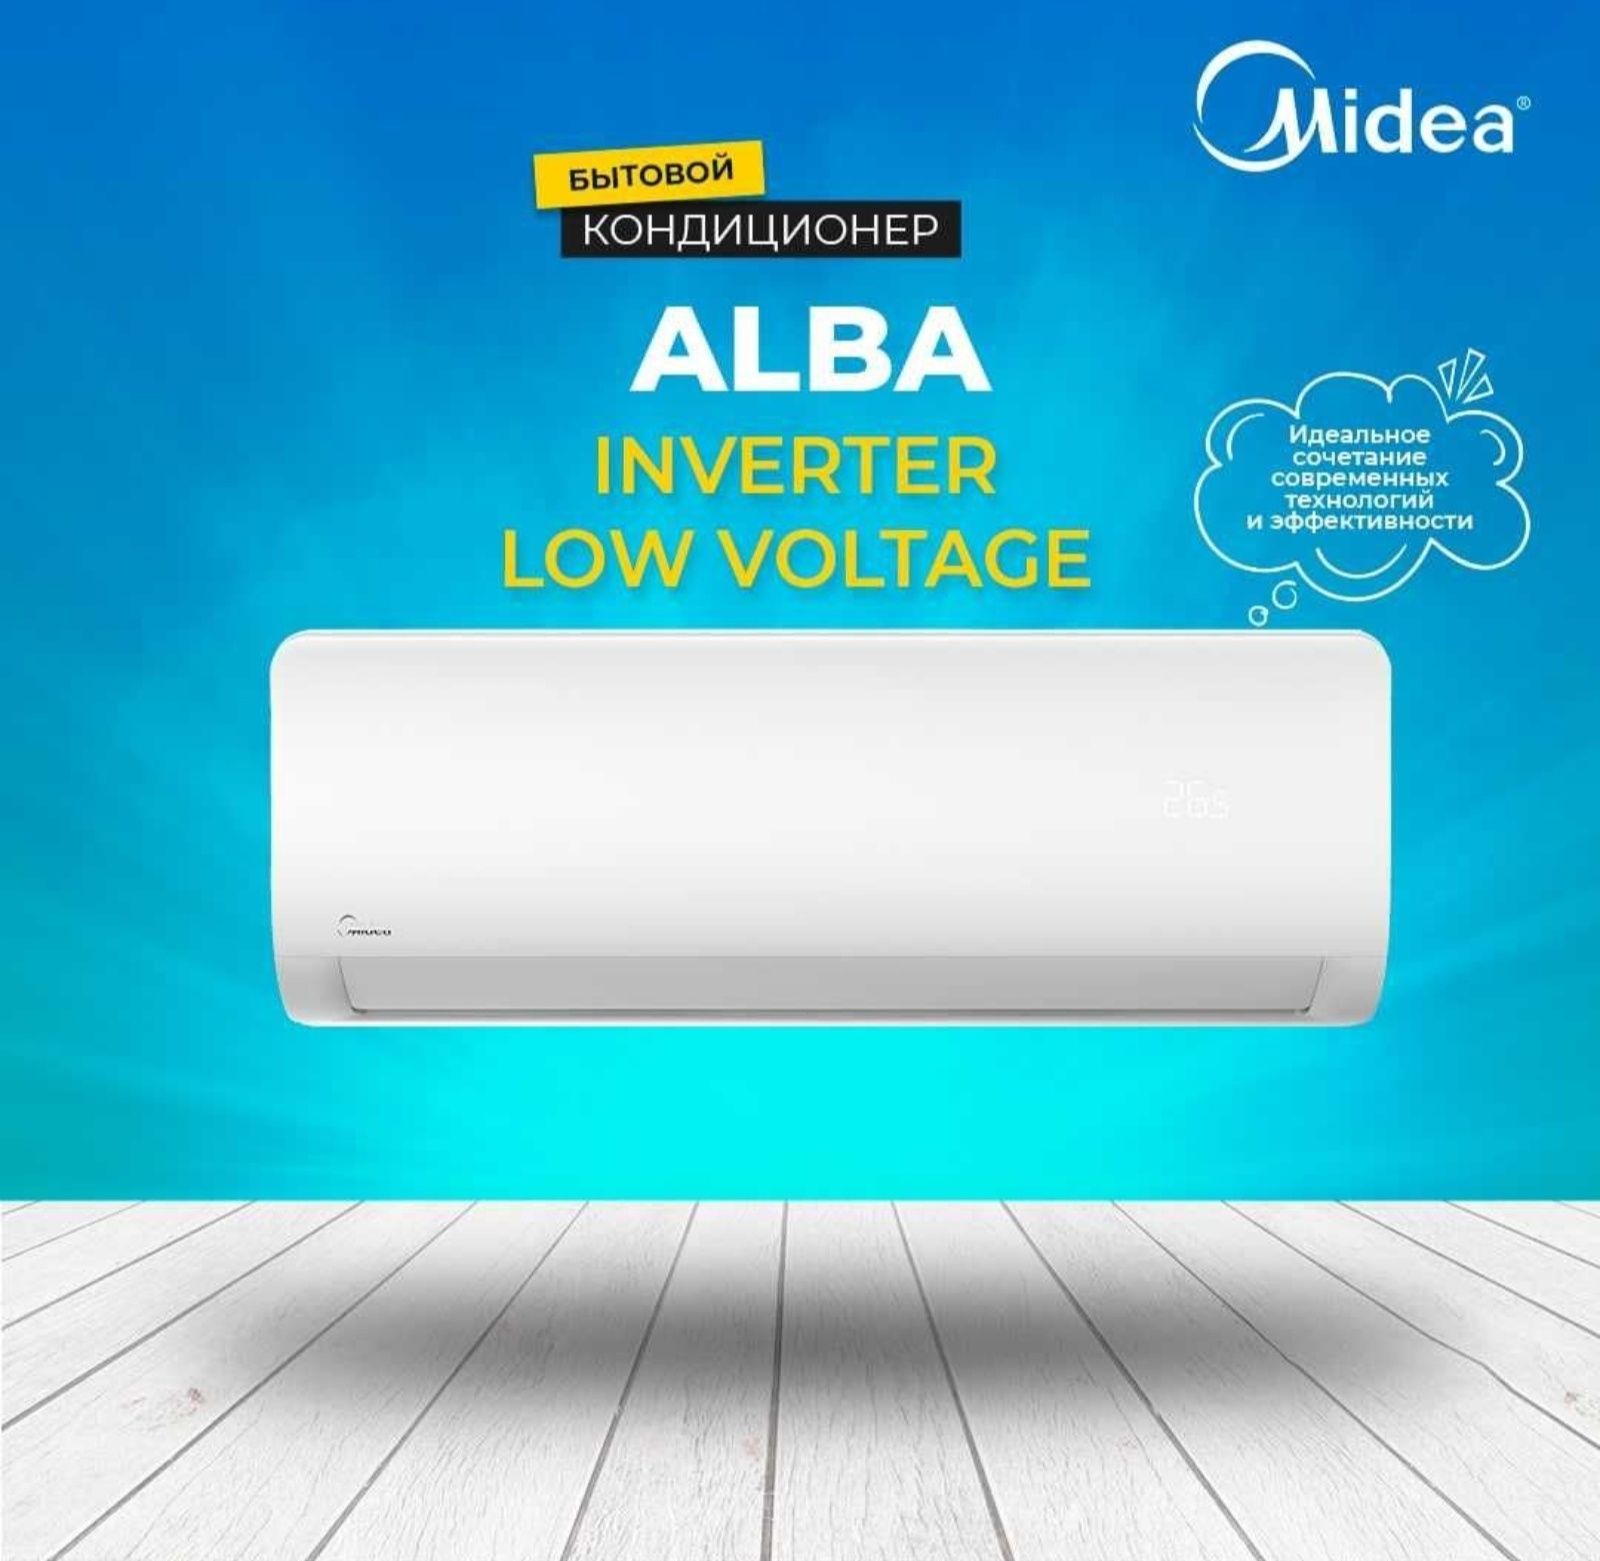 Кондиционер Midea Alba Inverter + Low voltage  
Японский компр